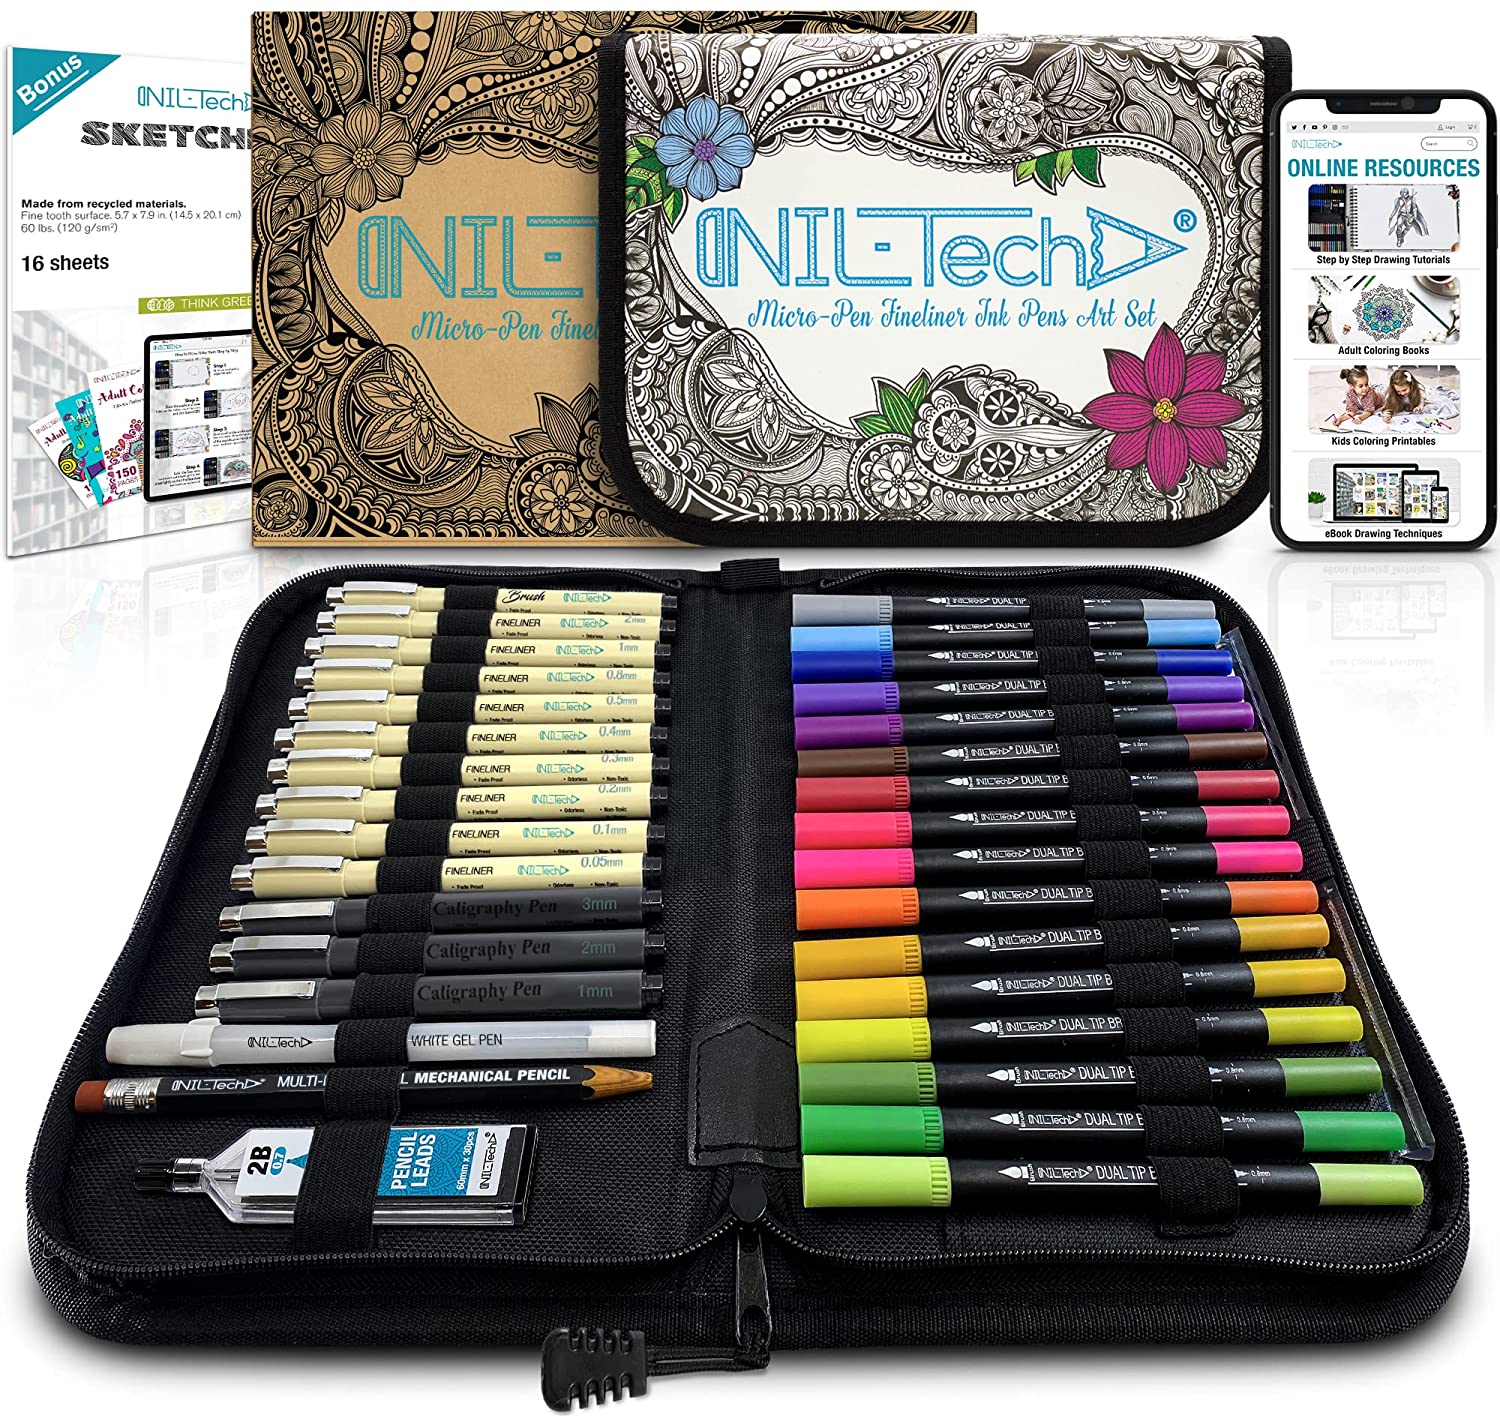 Art Markers Dual Brush Pens for Coloring, 60 Artist Colored Marker Set,  Fine and Brush Tip Pen Art Supplier for Kids Adult Coloring Books, Bullet